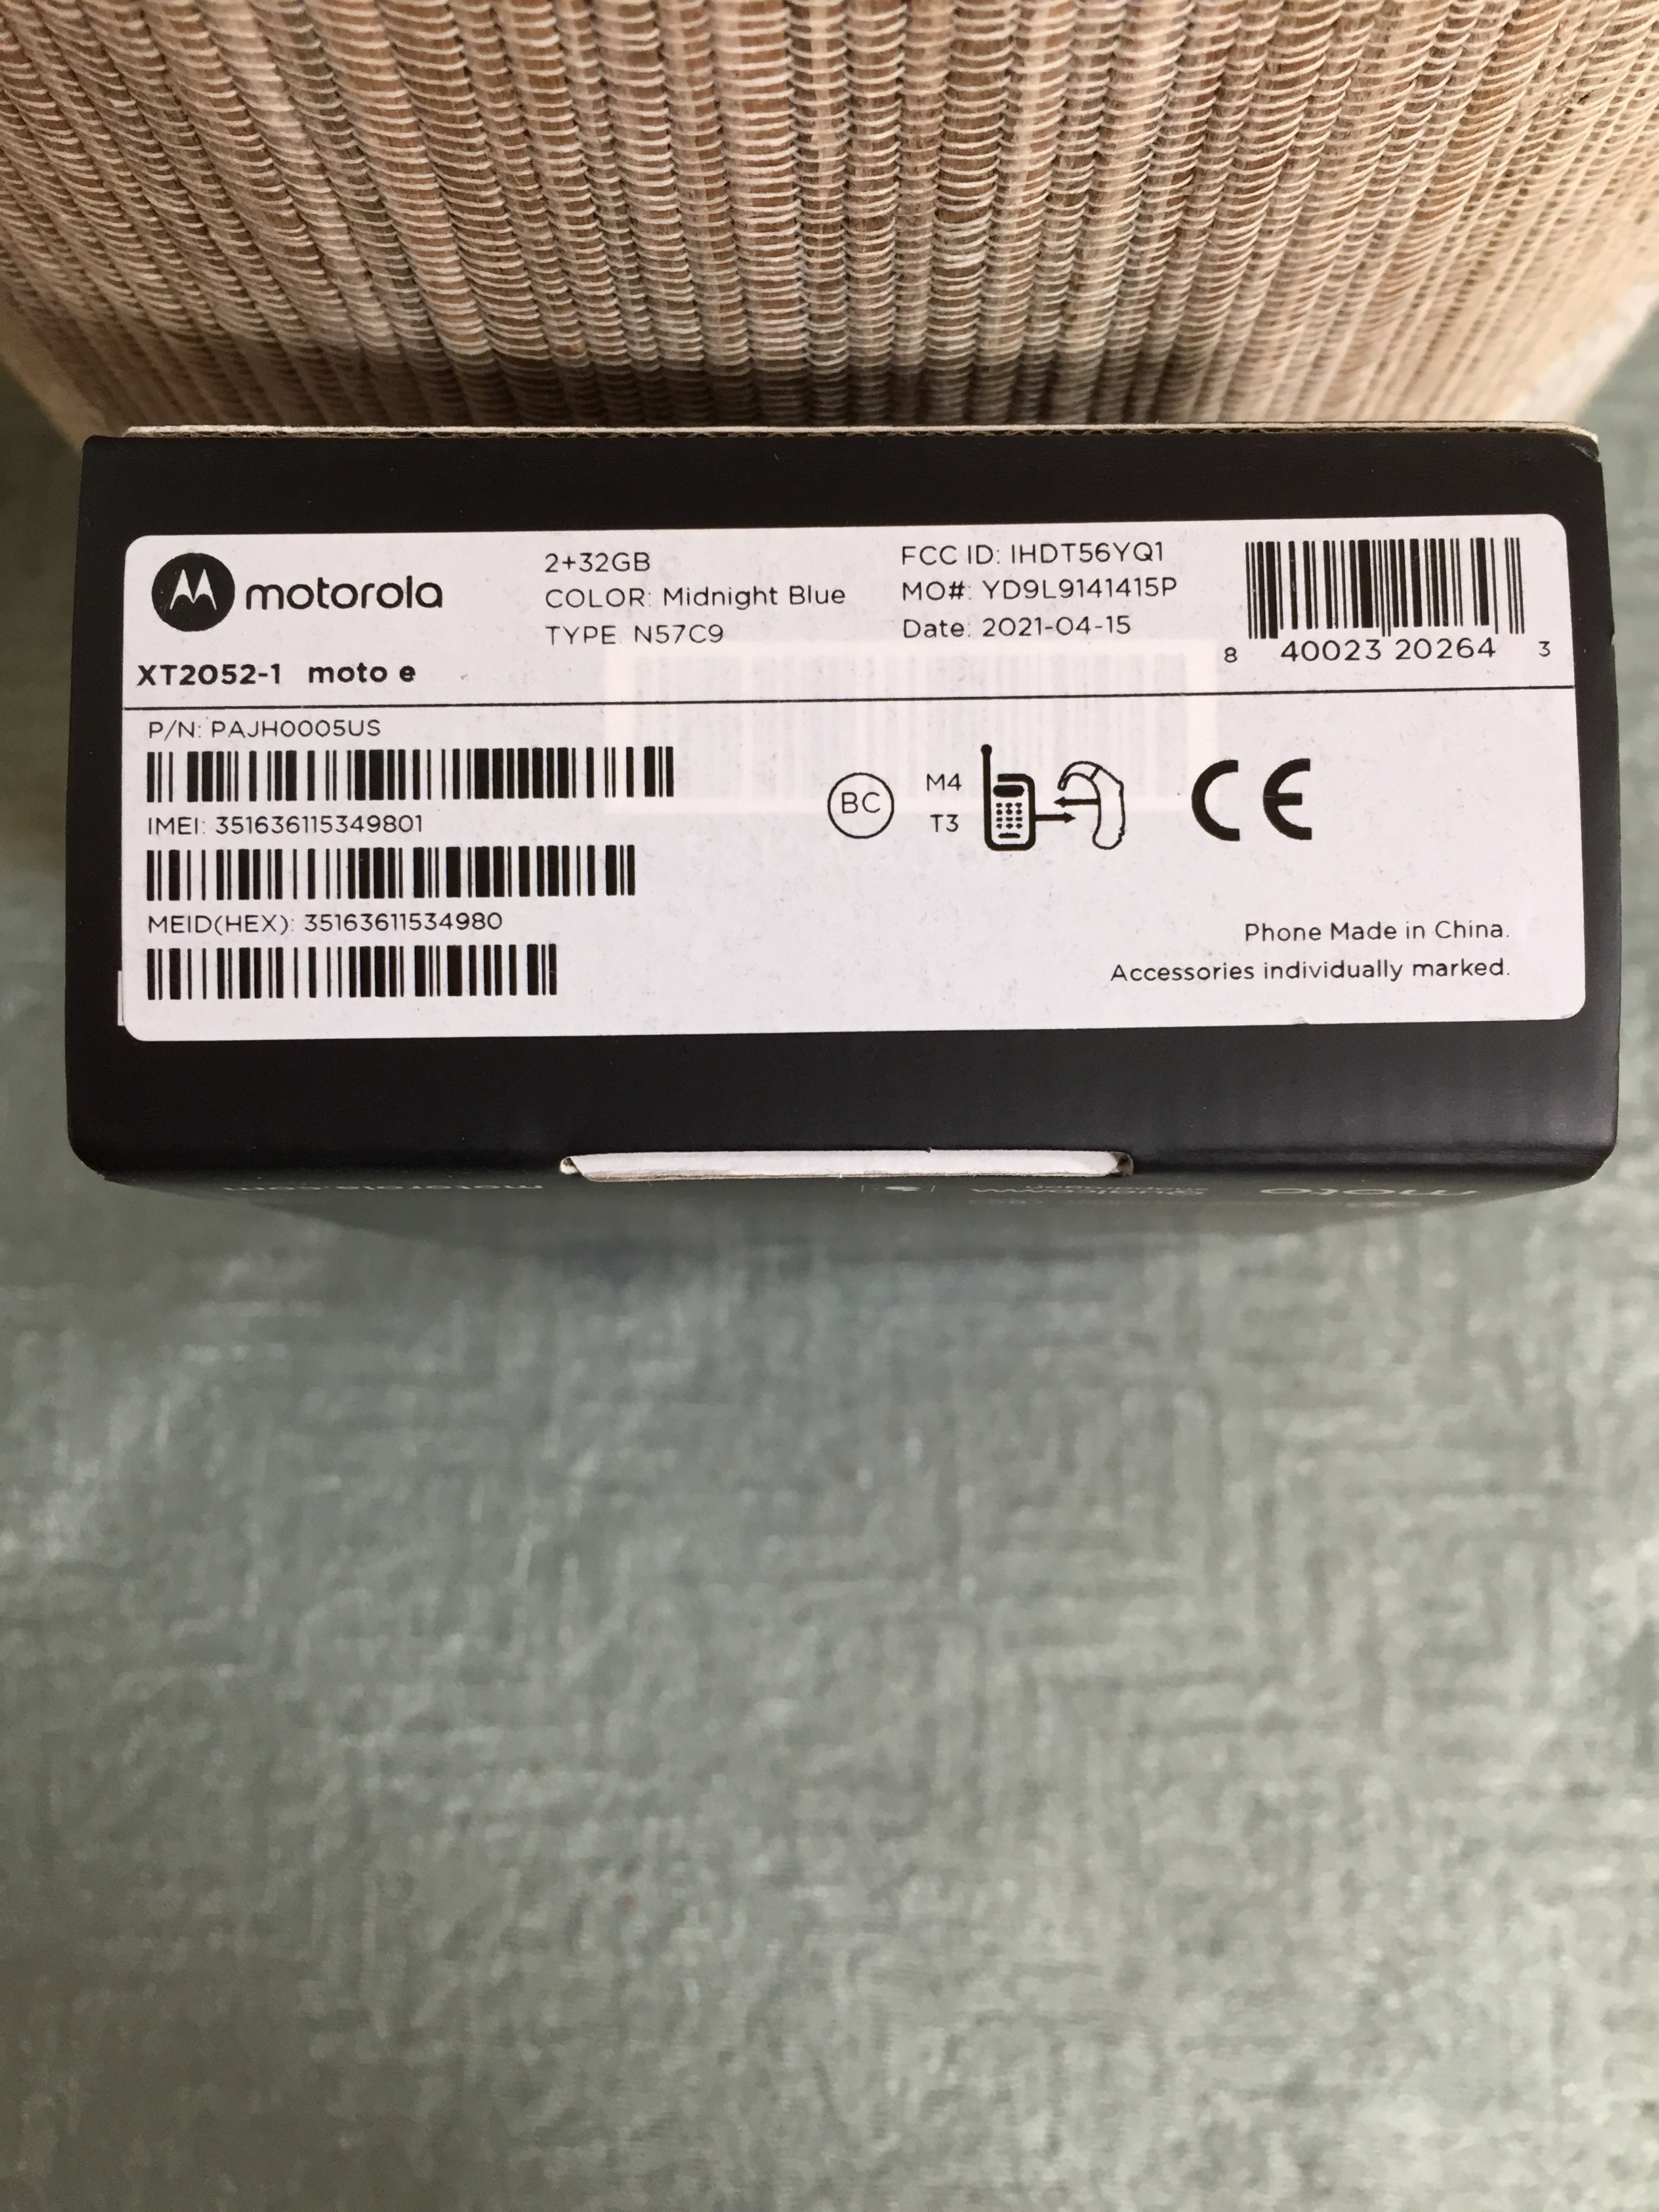 Moto E | Unlocked | Made for US by Motorola | 2/32GB | 13MP Camera | 2020 | Blue (7578138247406)